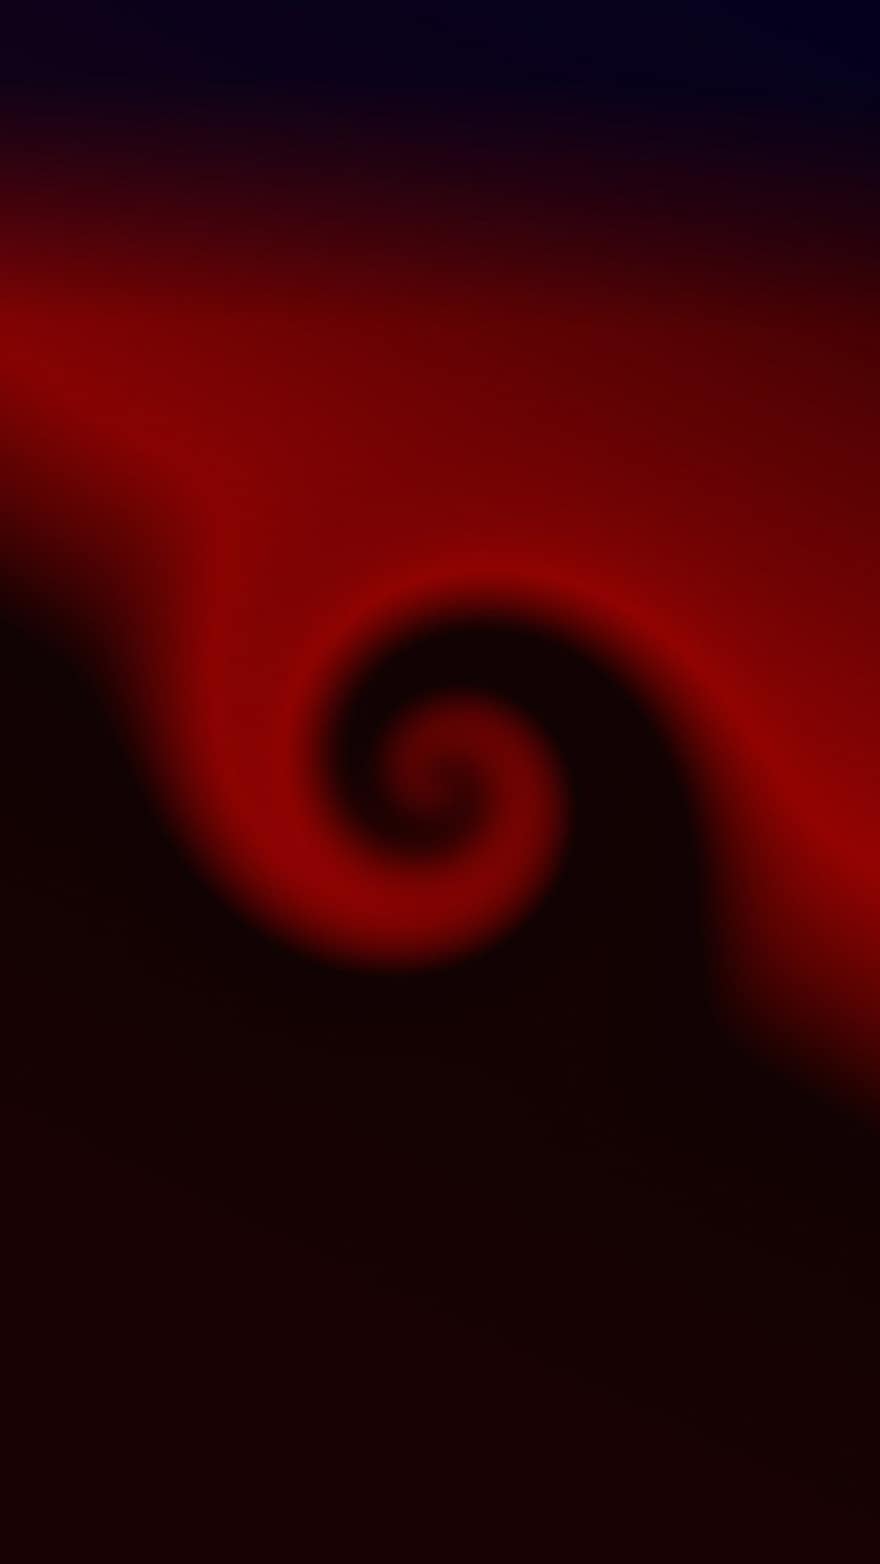 spiralformet, baggrund, sort, rød, abstrakt